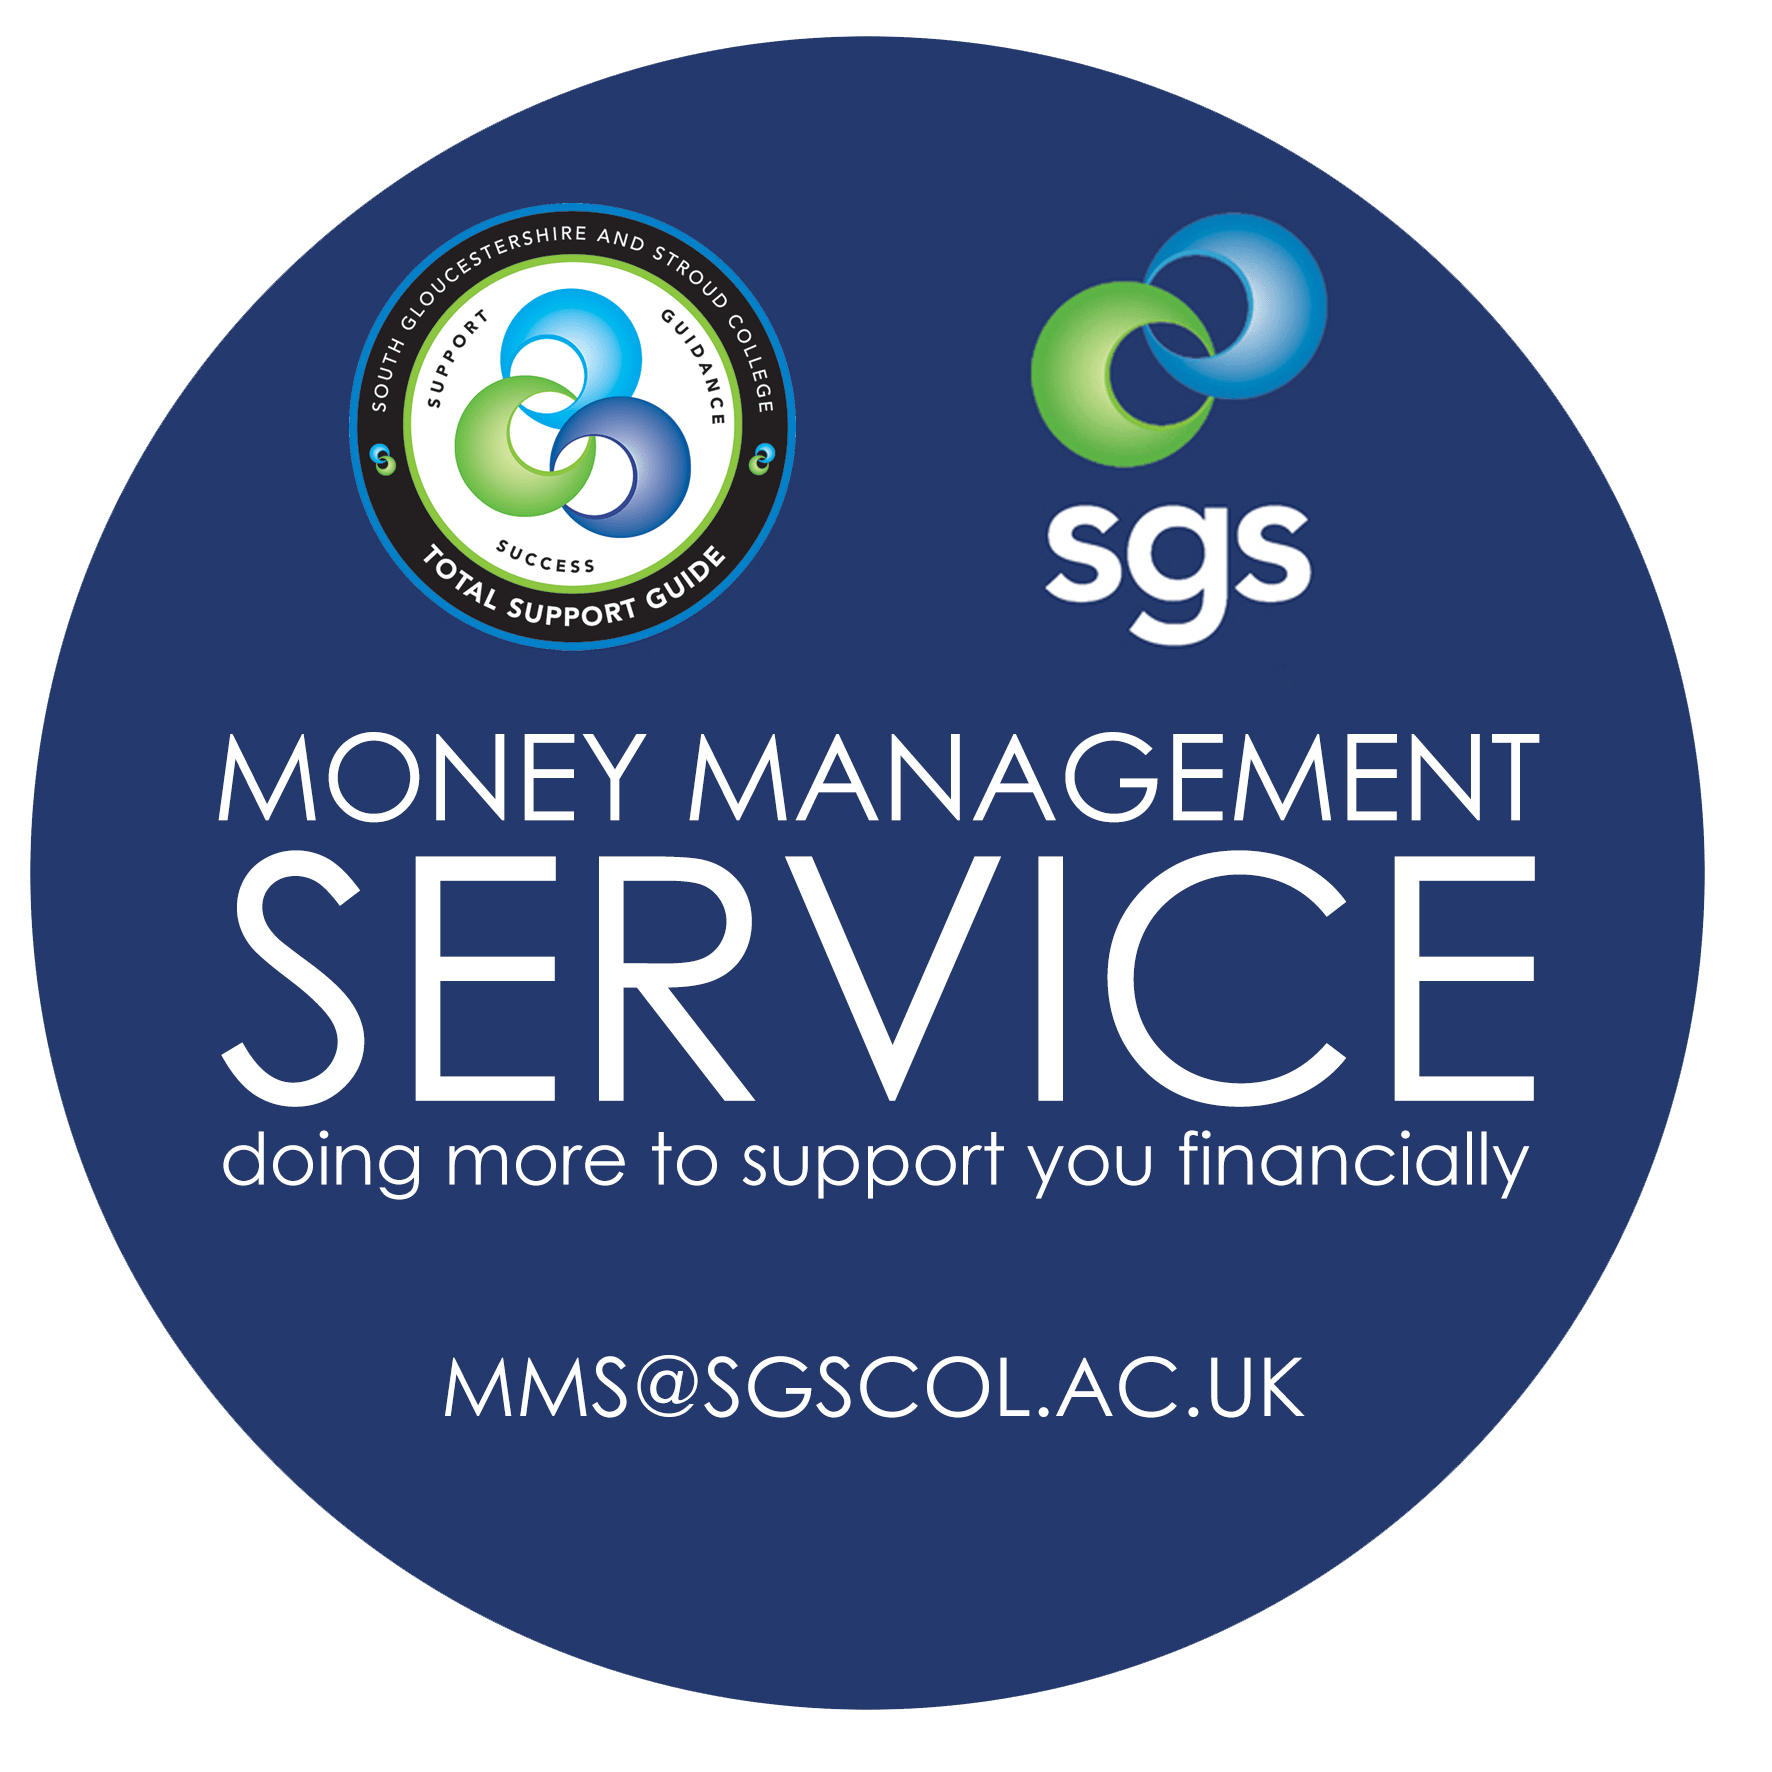 The money management service logo